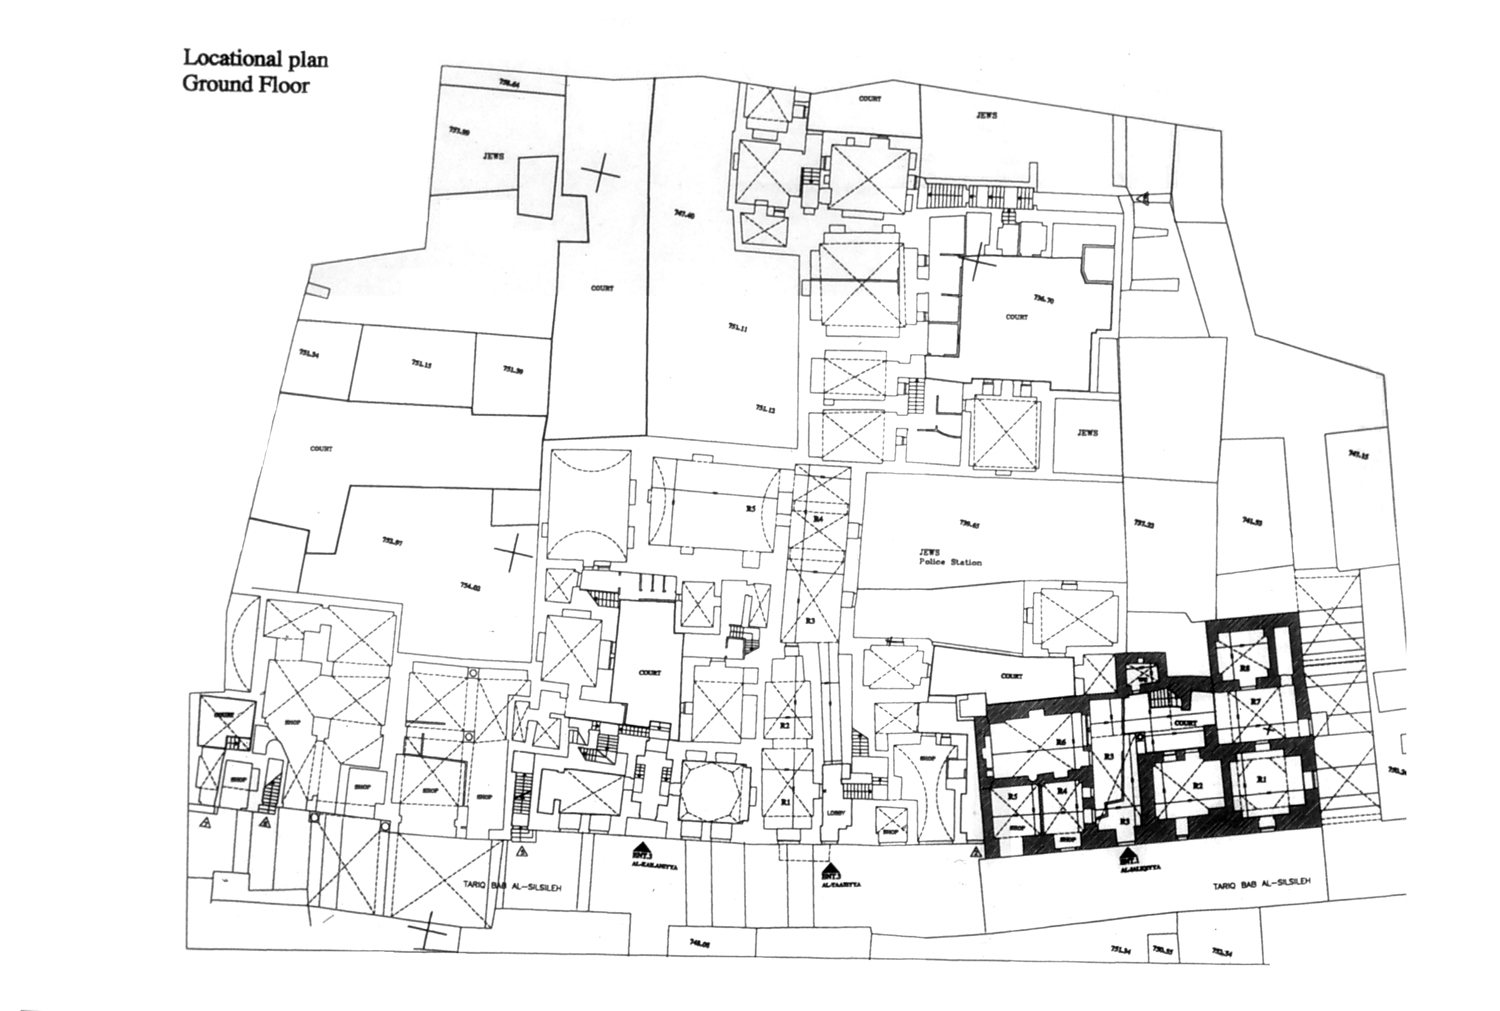 Locational plan, ground floor plan